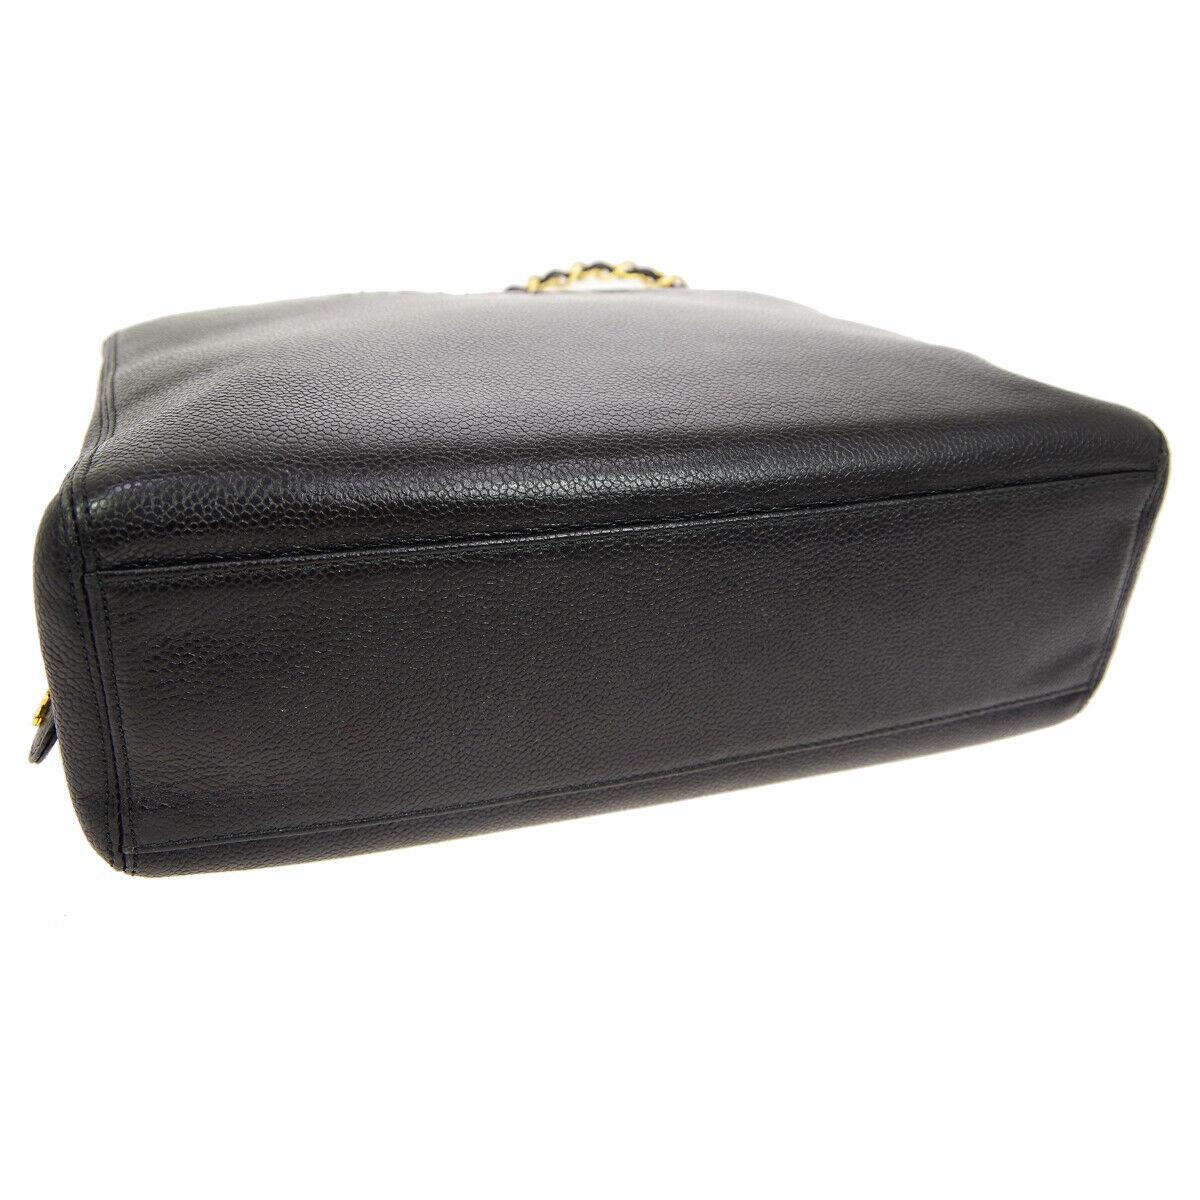 Women's Chanel Black Leather Gold Large 'CHANEL' Travel Carryall Shoulder Bag in Box 